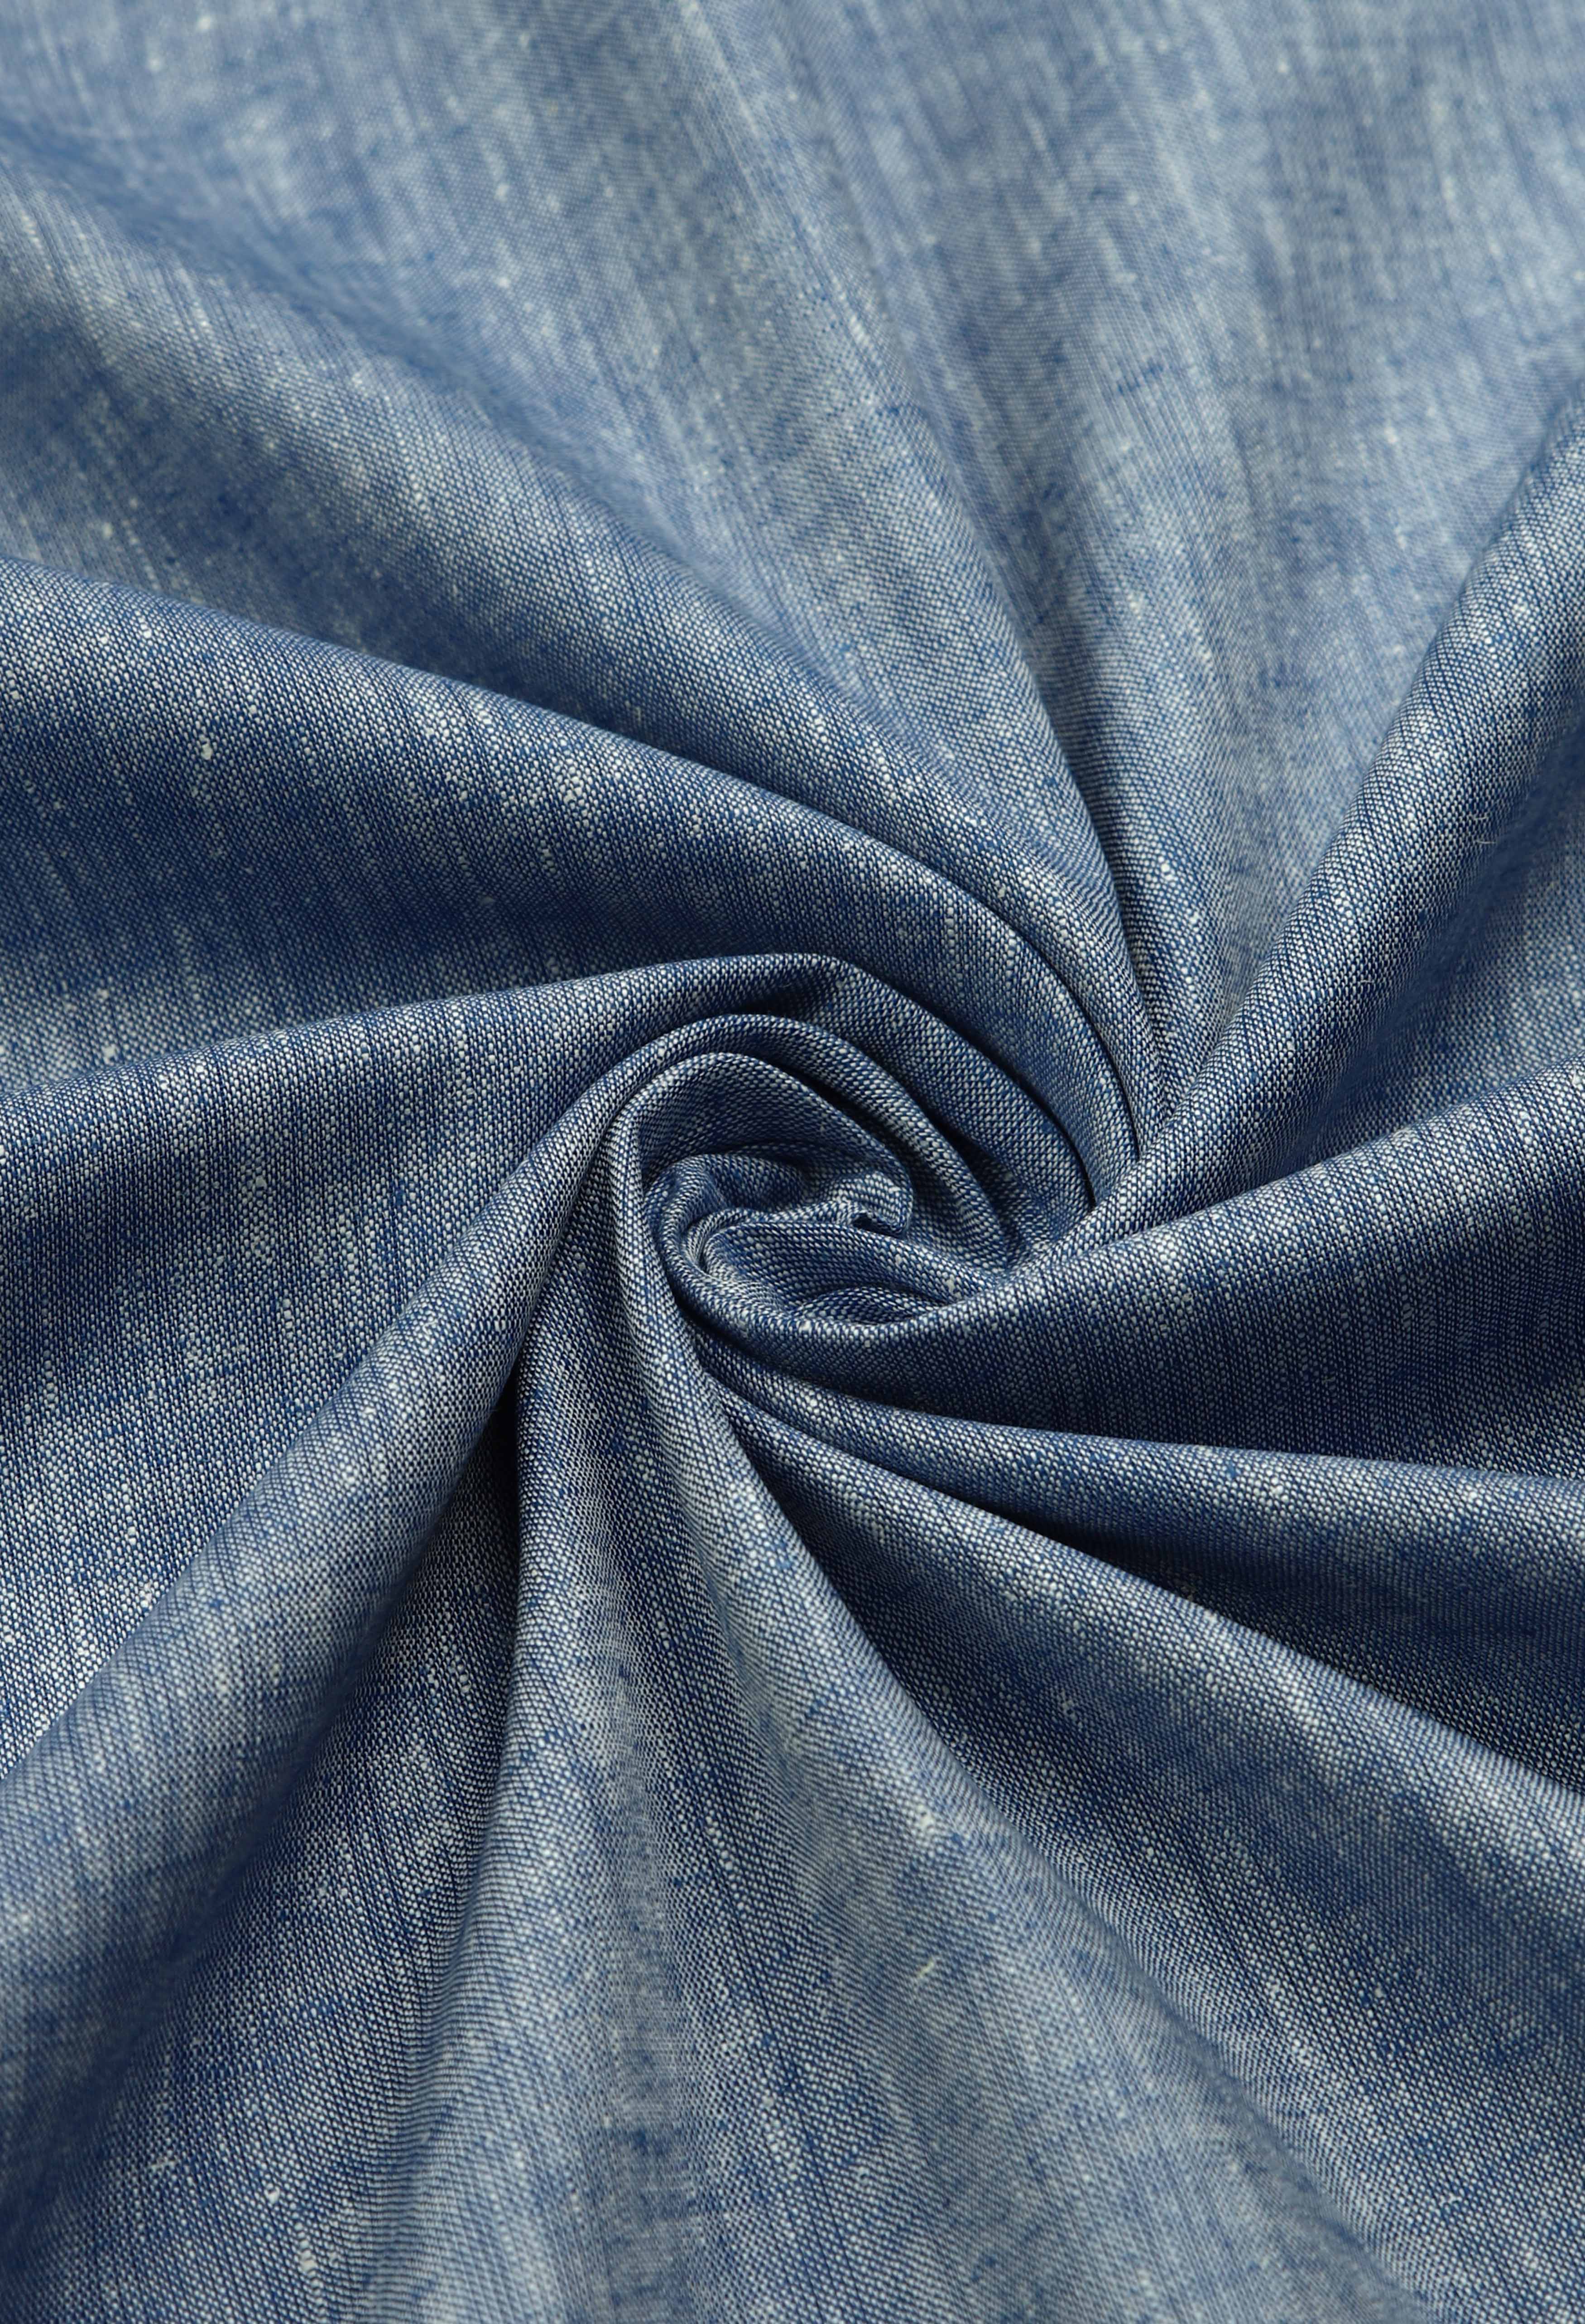 Royal Blue Linen